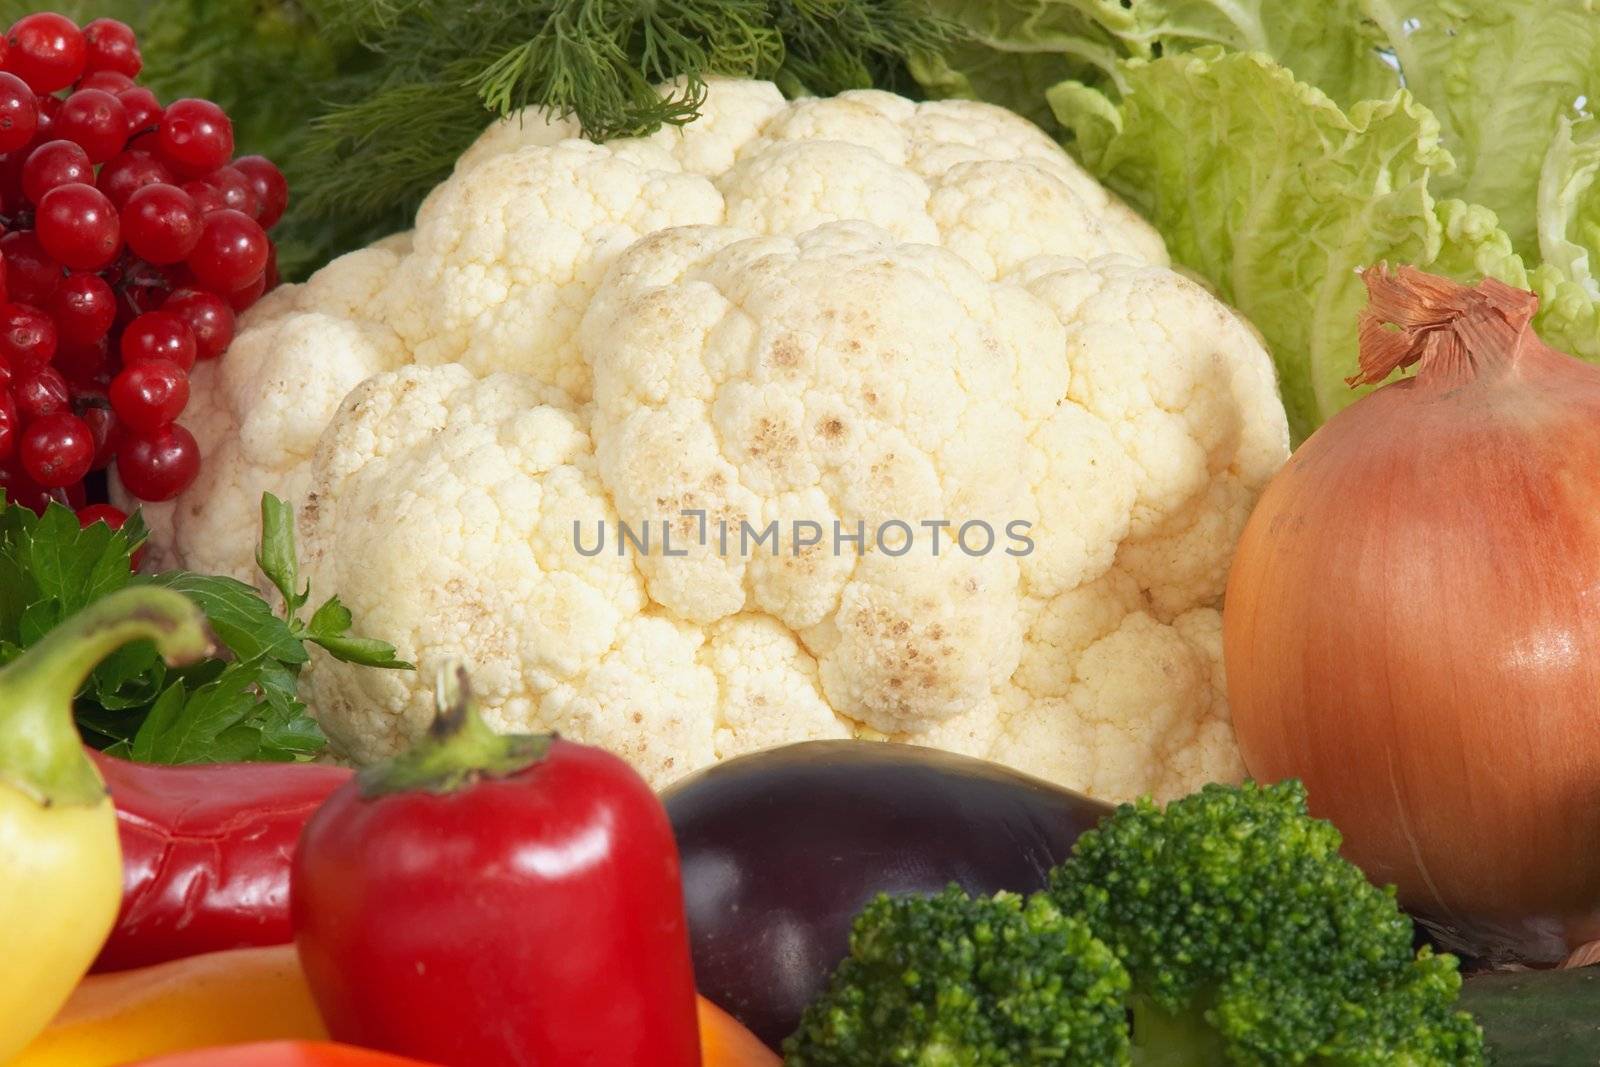 An image of cauliflower amongst vegetables